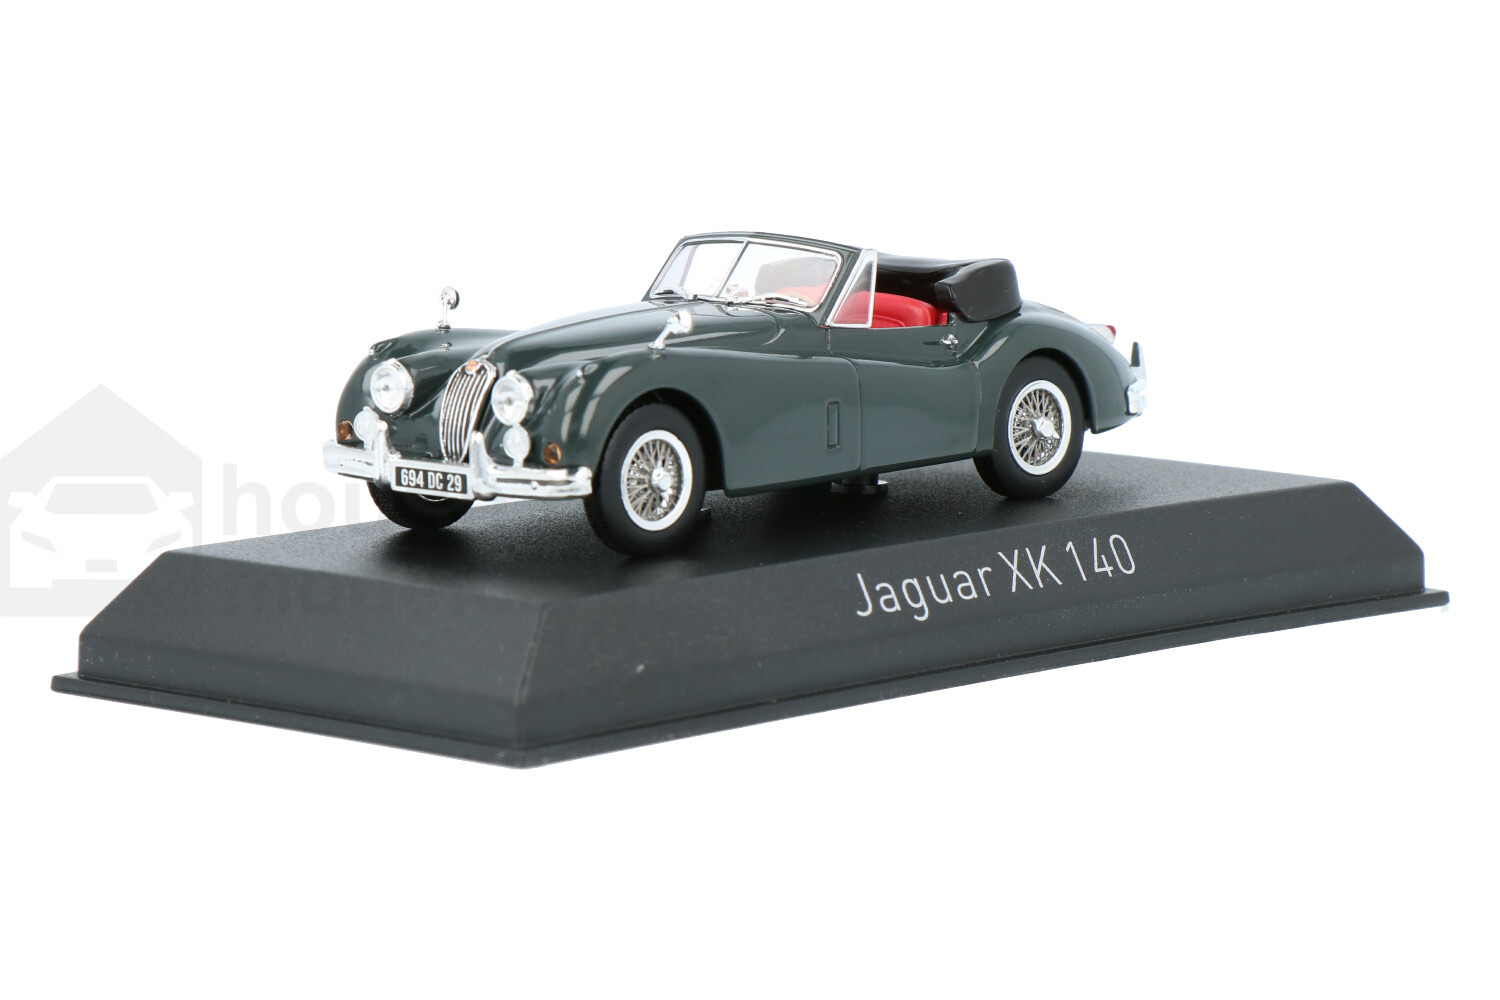 Jaguar-XK140-Cabriolet-270032_13153551092700325-NorevJaguar-XK140-Cabriolet-270032_Houseofmodelcars_.jpg